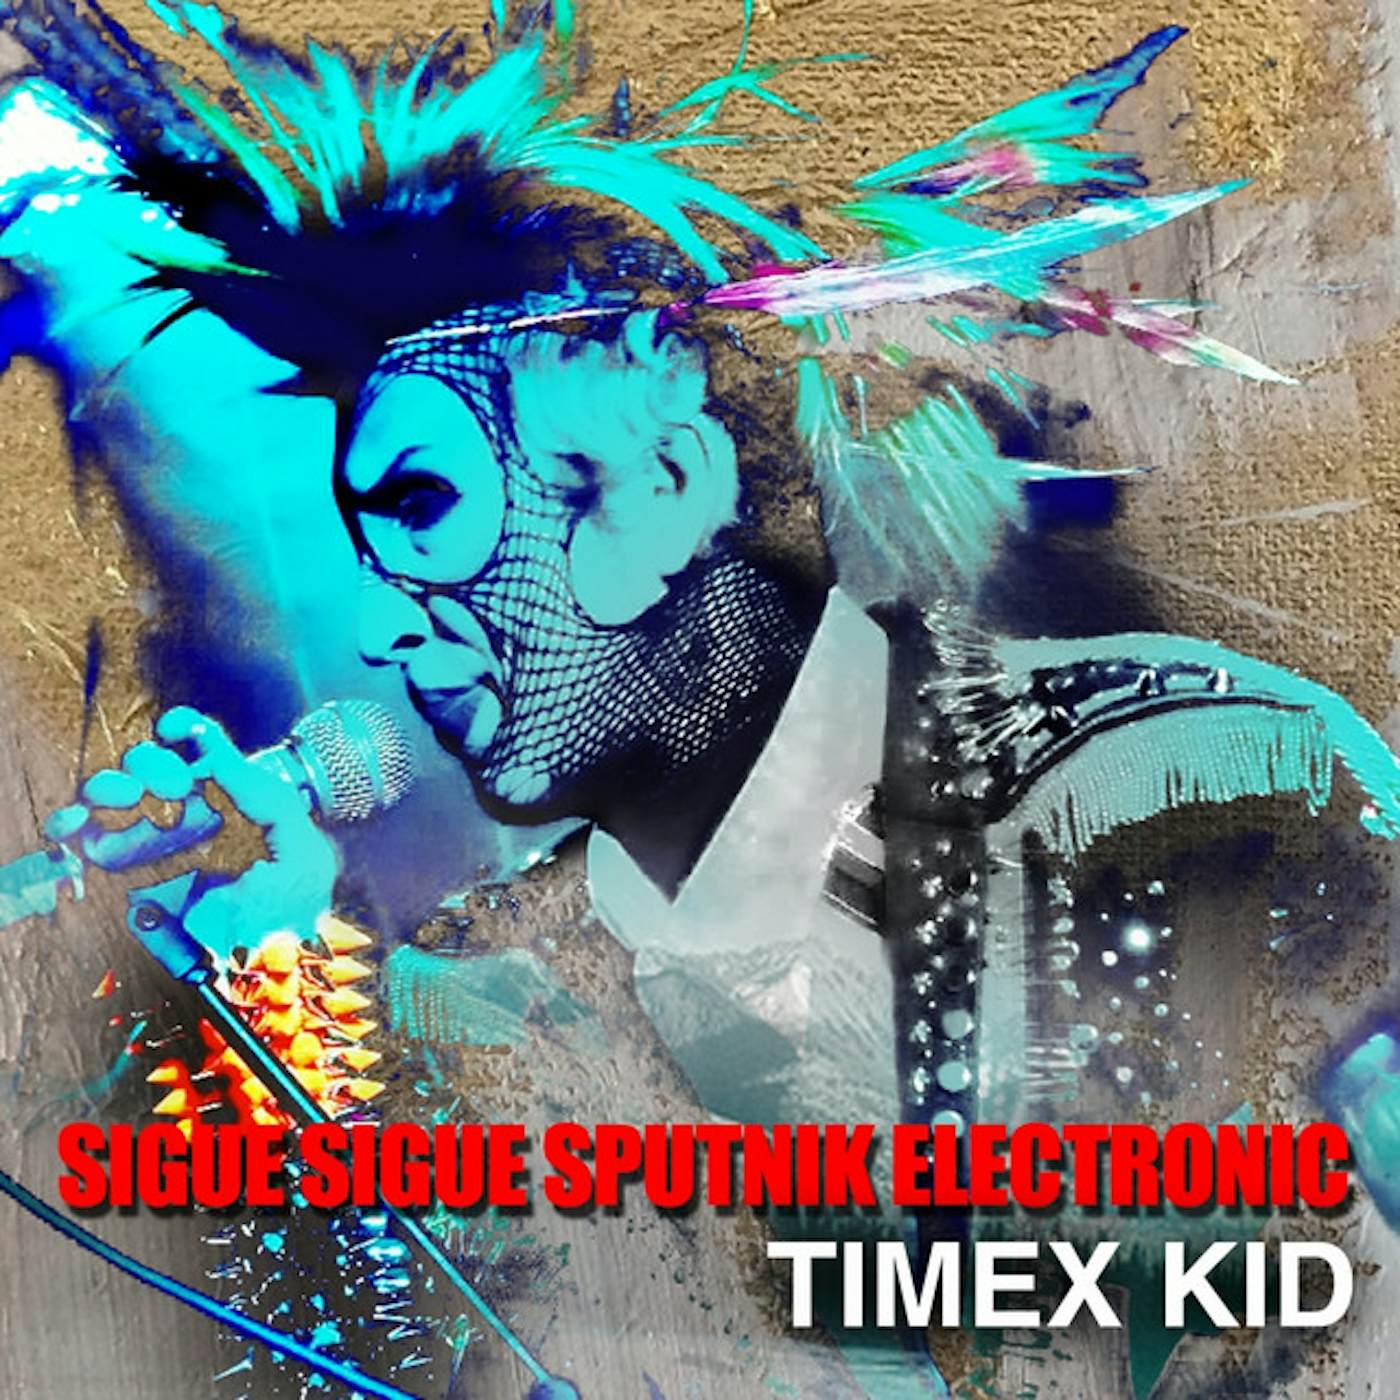 Sigue Sigue Sputnik Electronic Timex Kid Vinyl Record